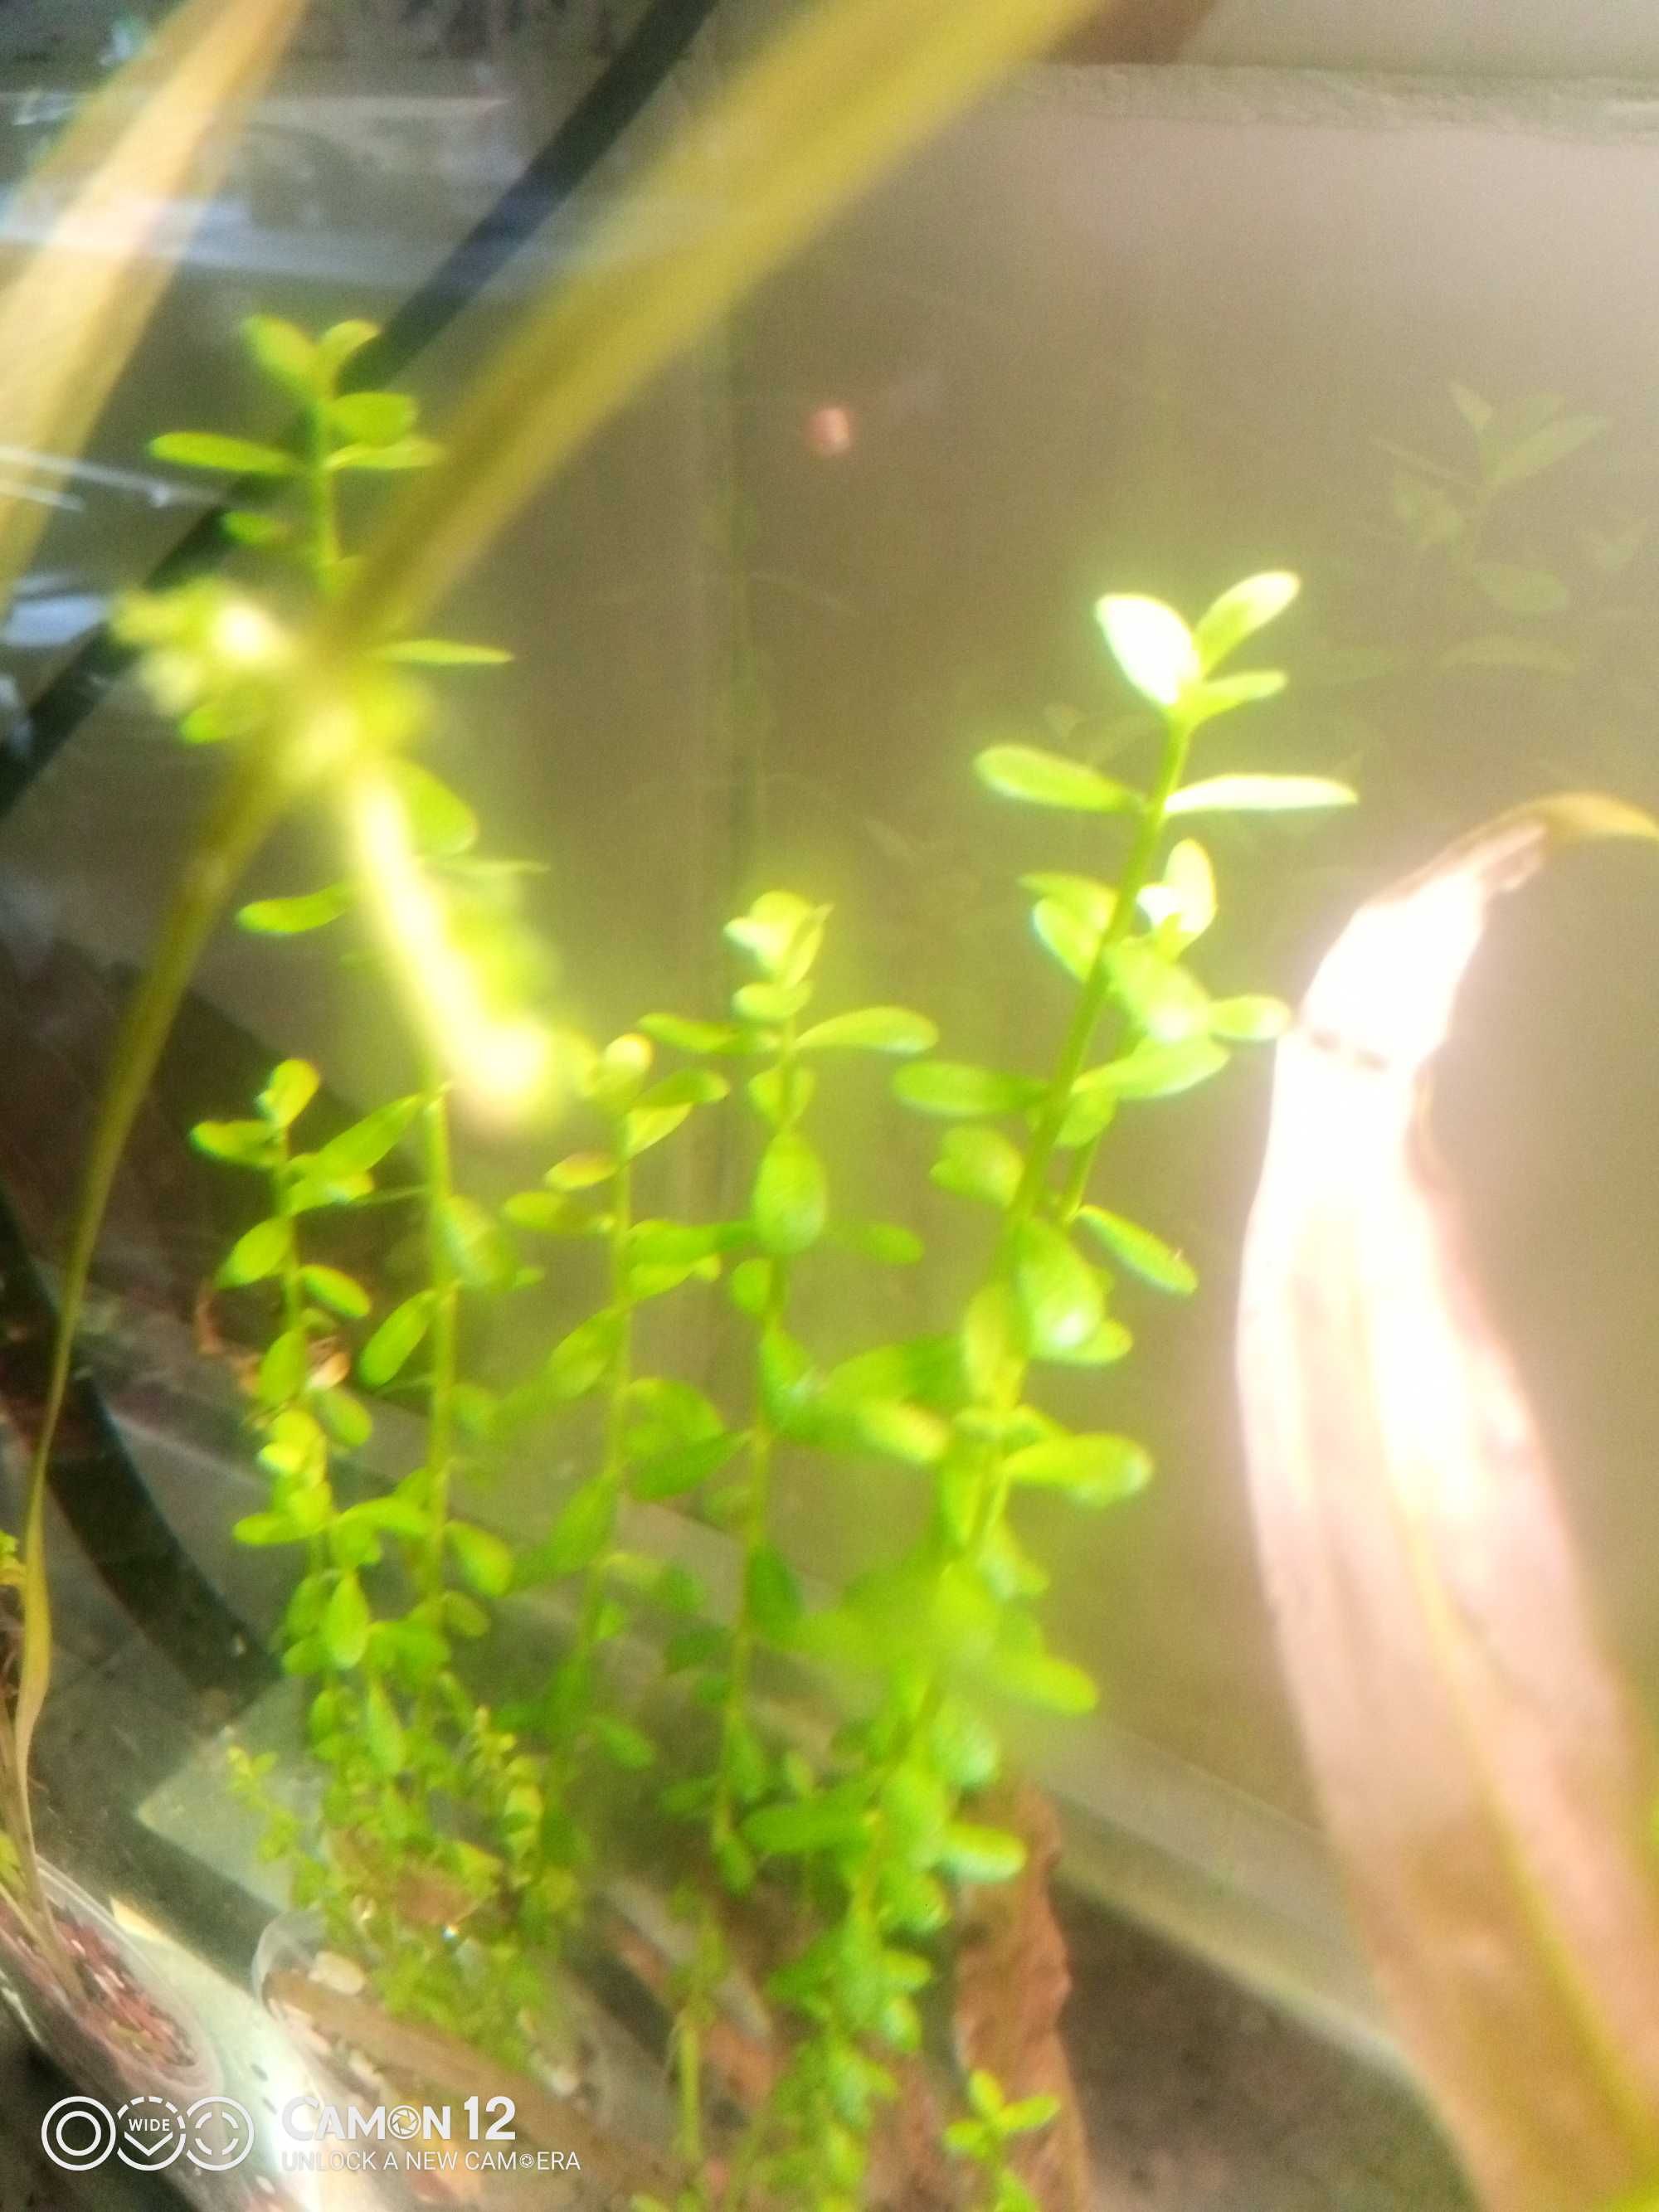 Растения в аквариум